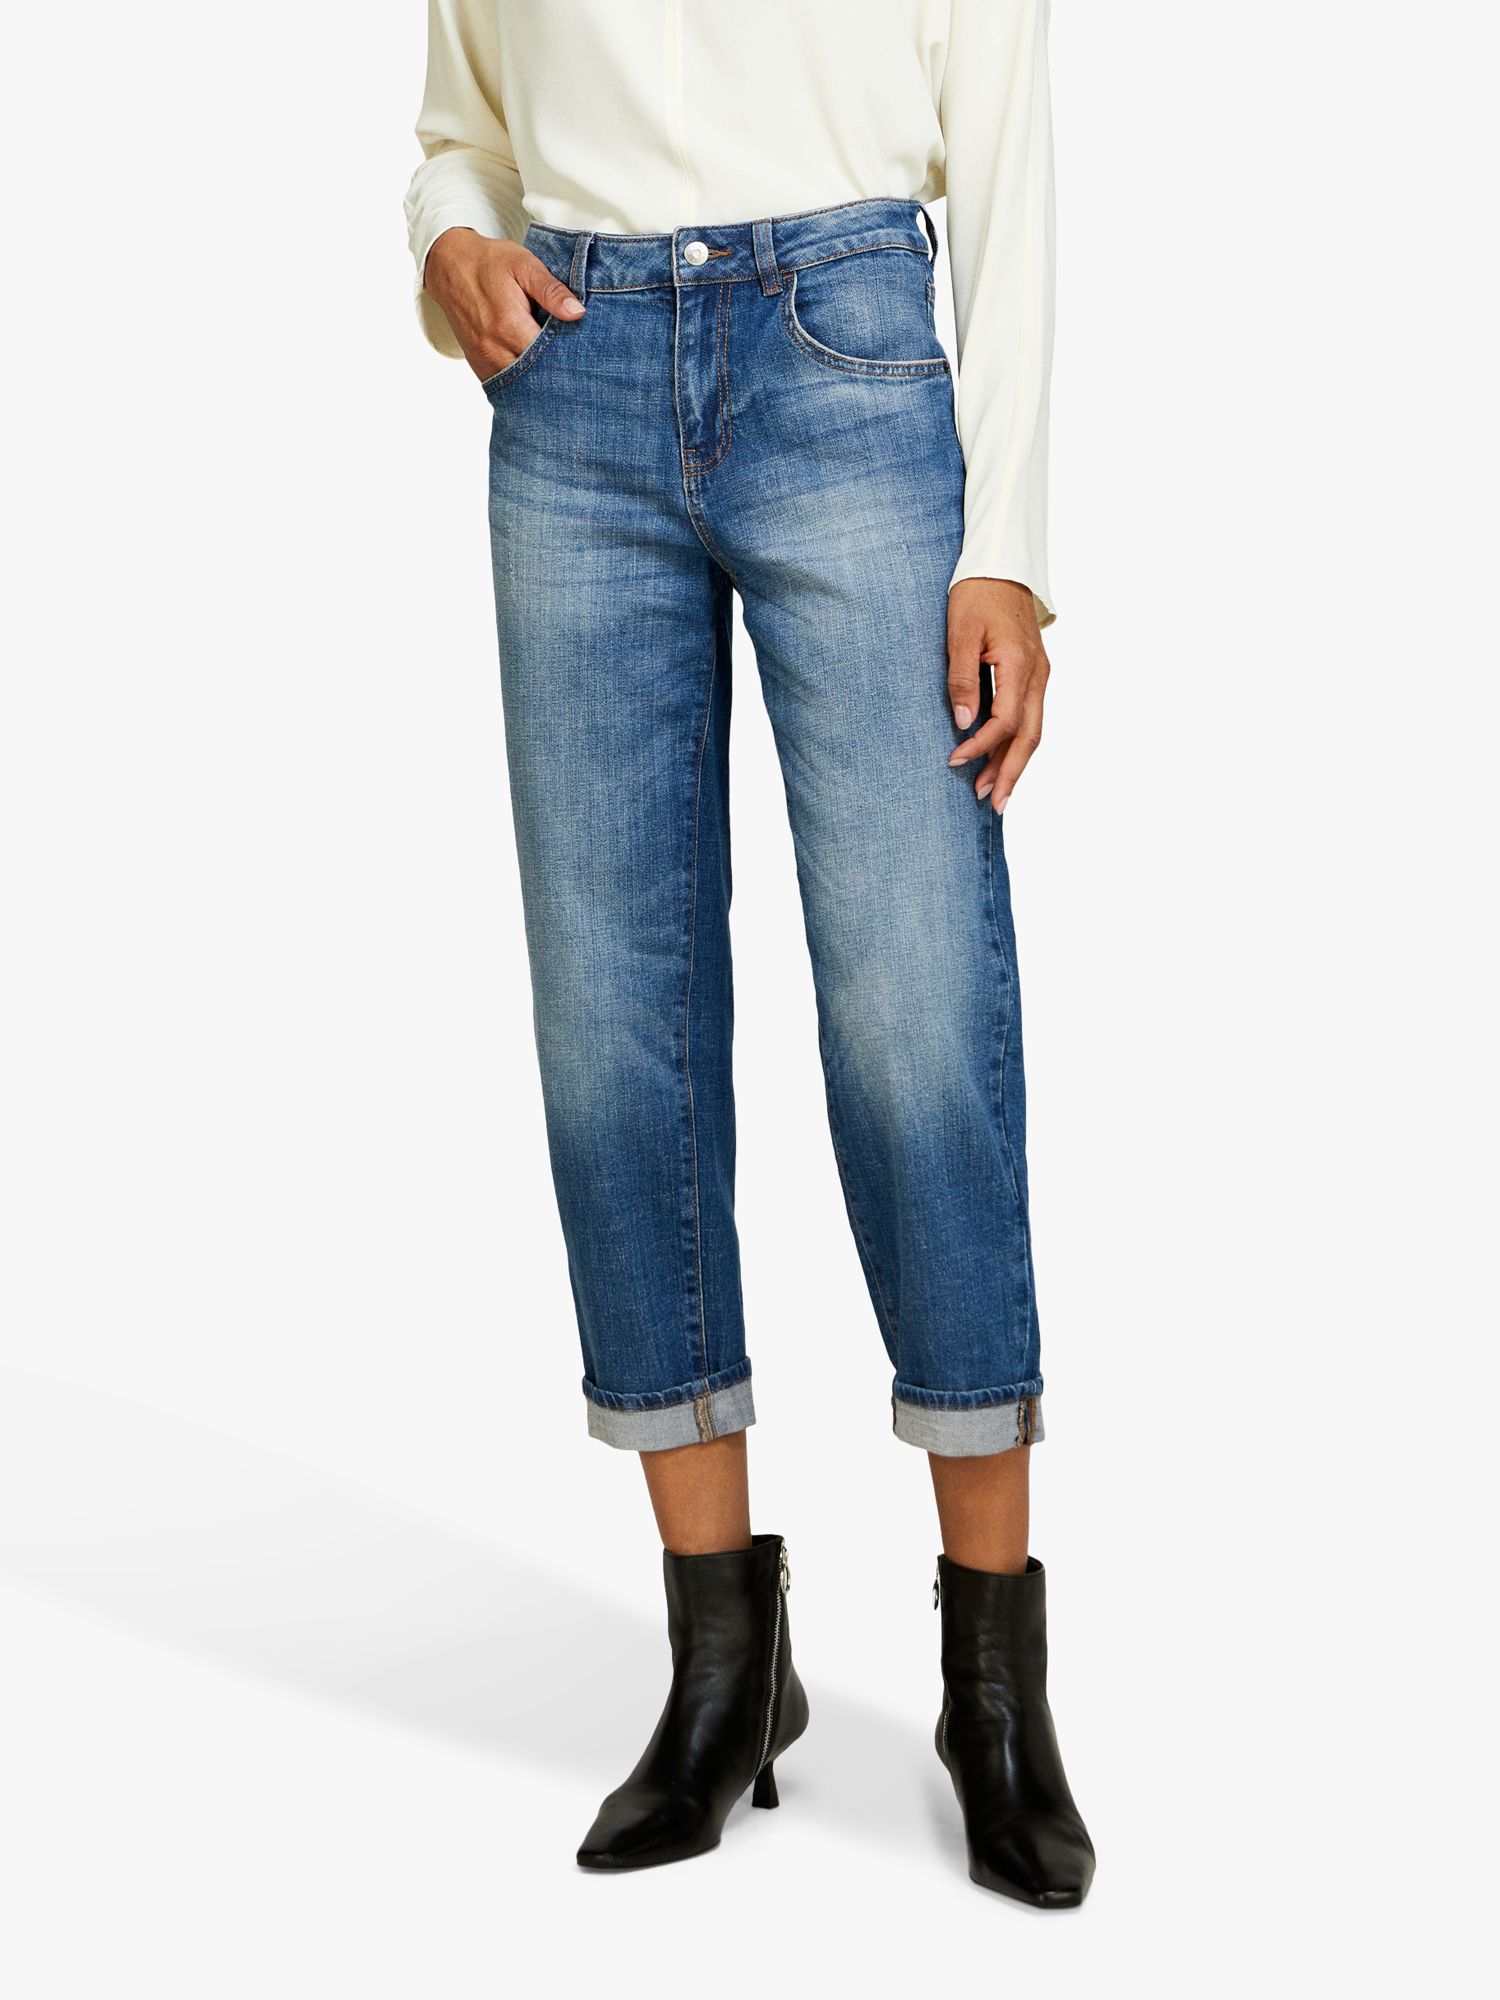 SISLEY Manhattan Cropped Straight Leg Jeans, Mid Blue Denim, 26R